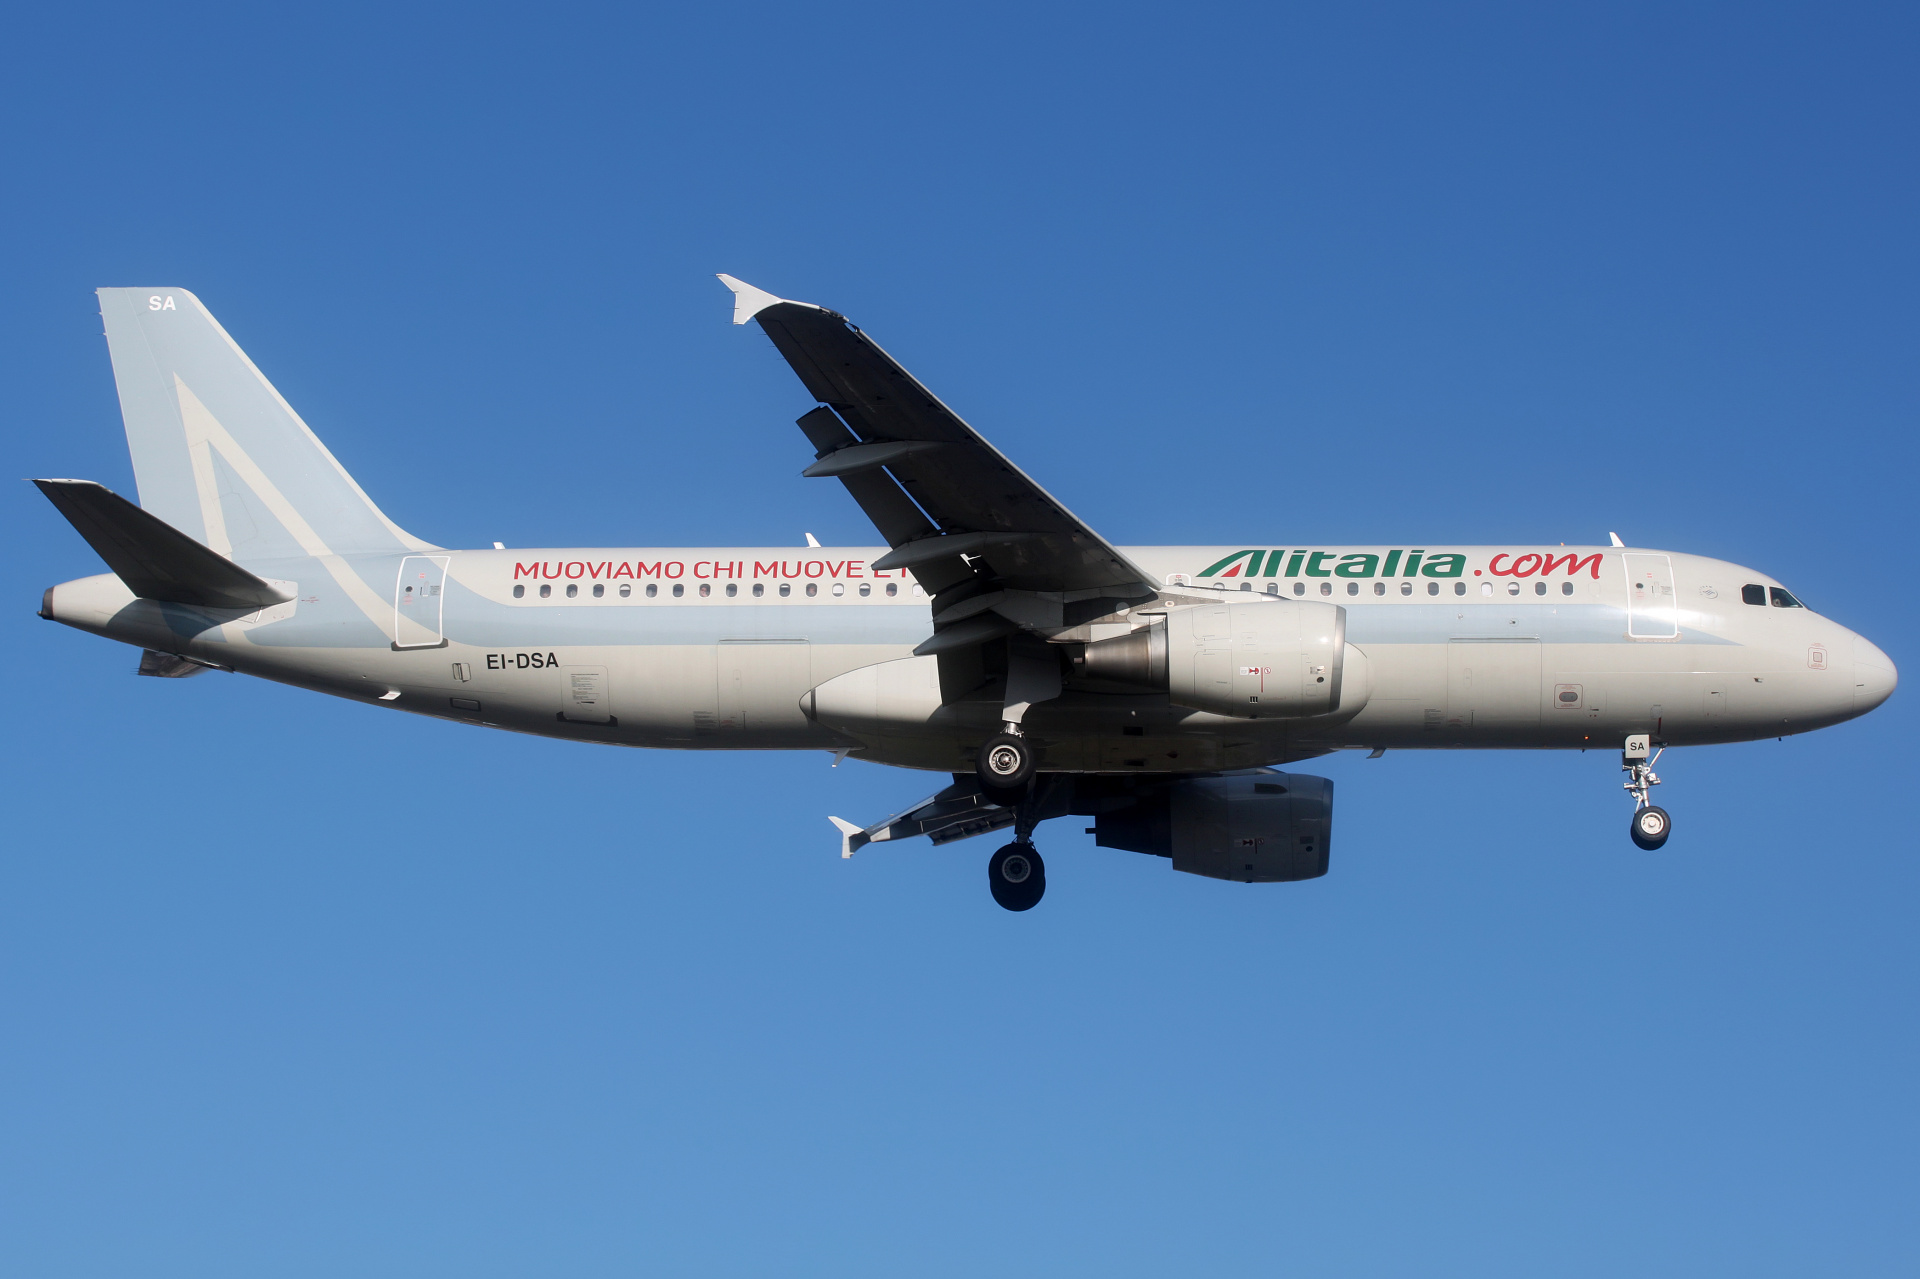 EI-DSA (special livery) (Aircraft » EPWA Spotting » Airbus A320-200 » Alitalia)